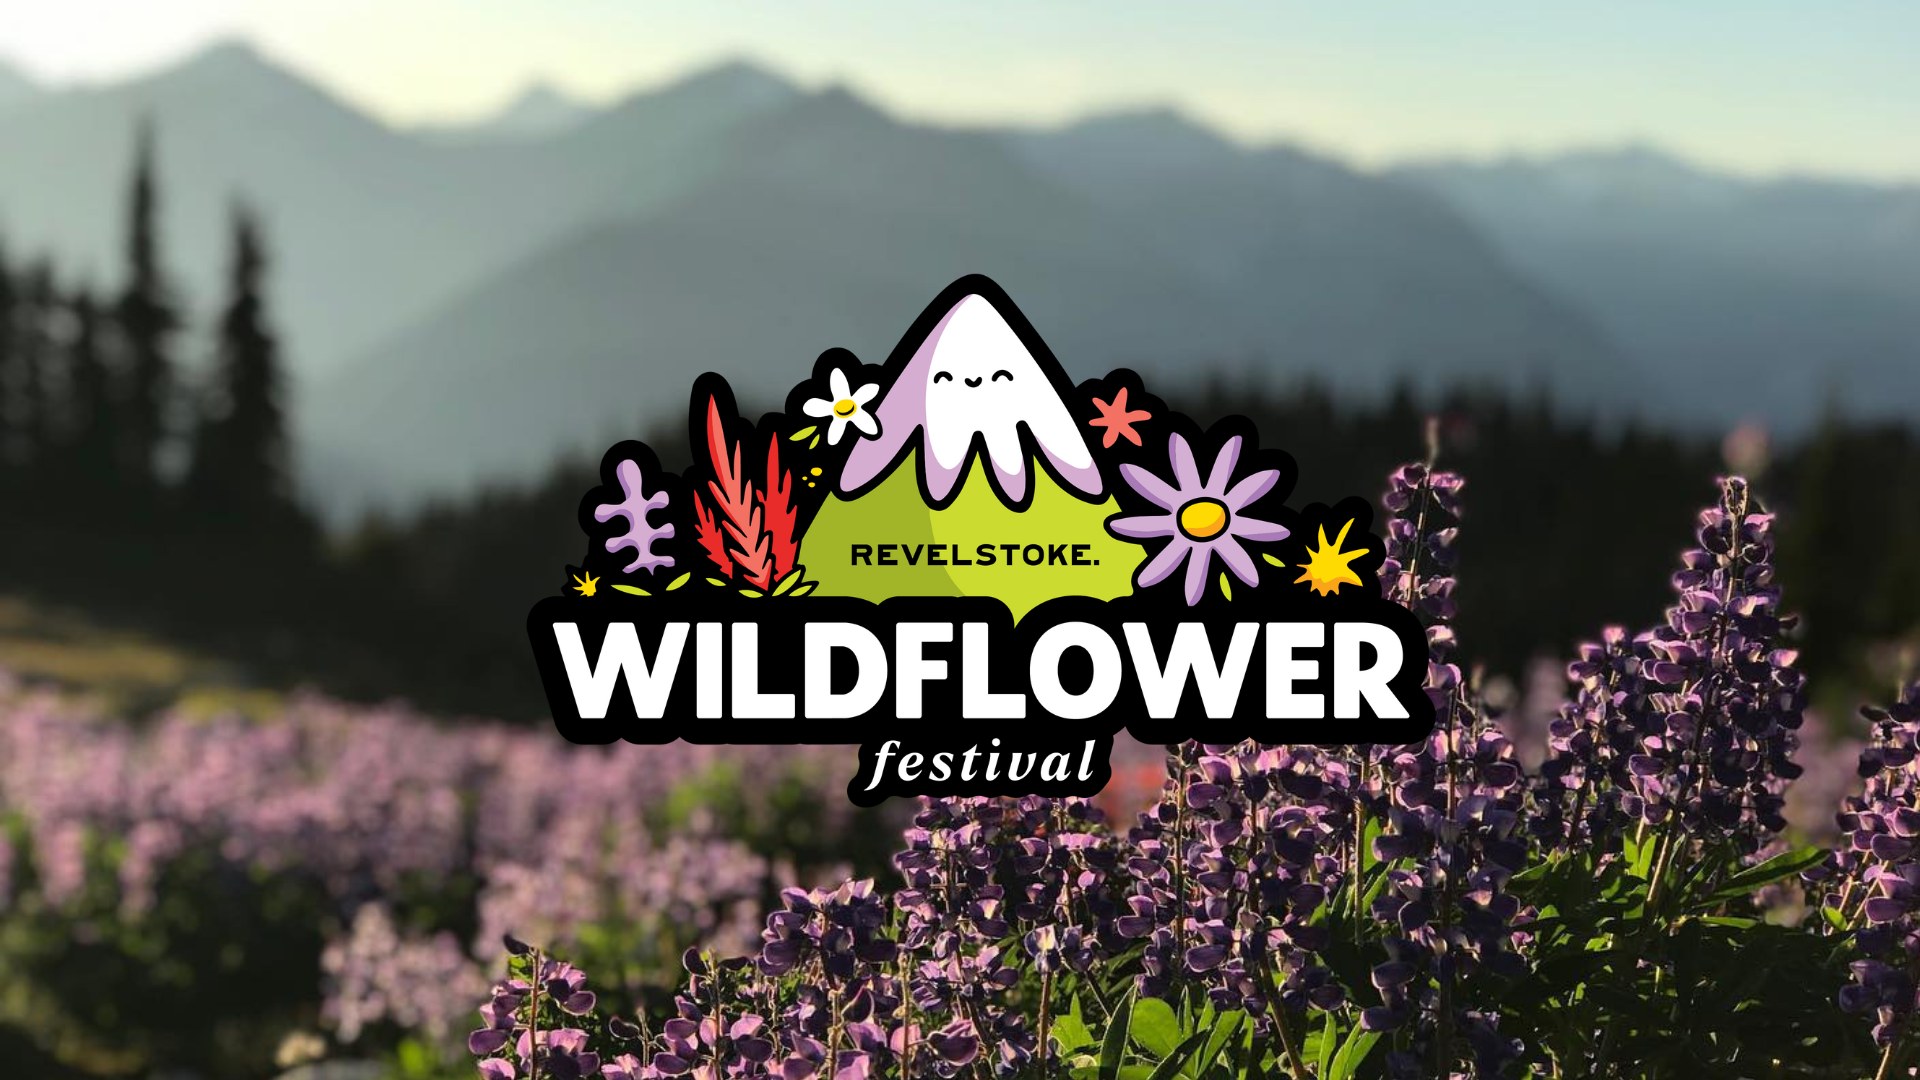 Wildflower Festival Image 2023